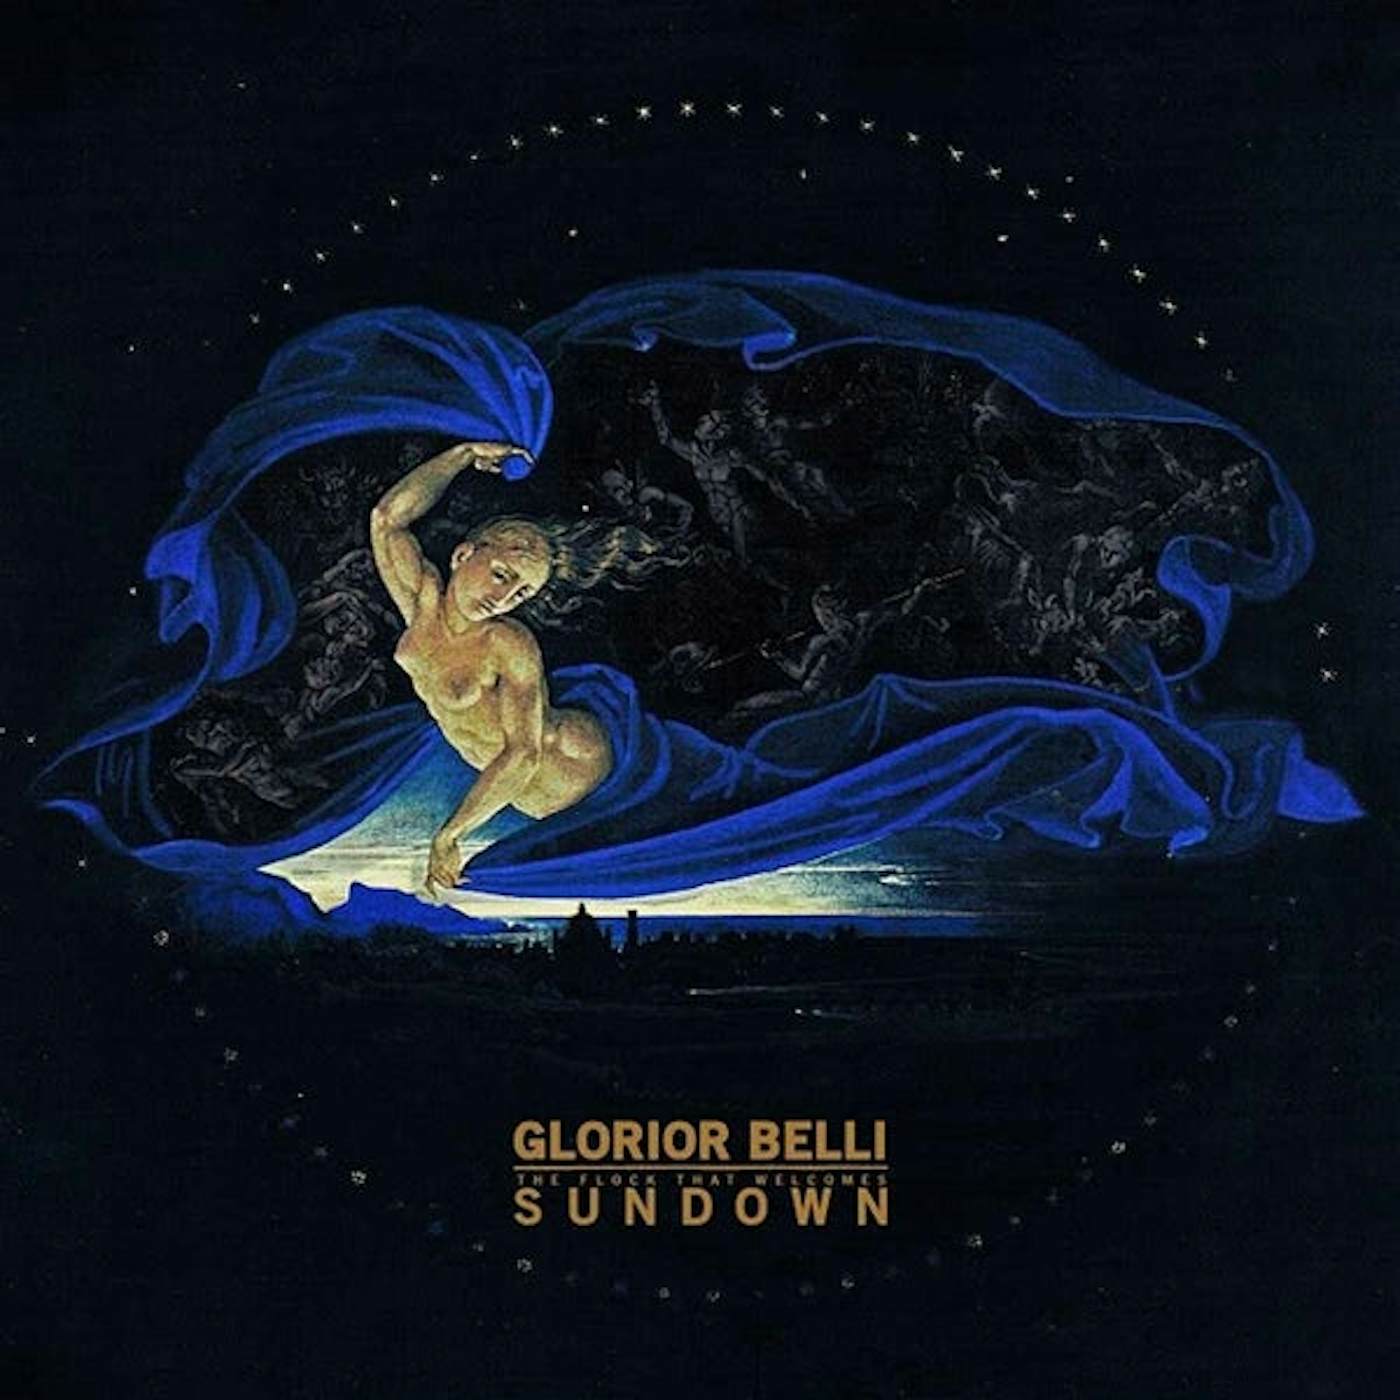 Glorior Belli CD - Sundown (The Flock That Welcomes)